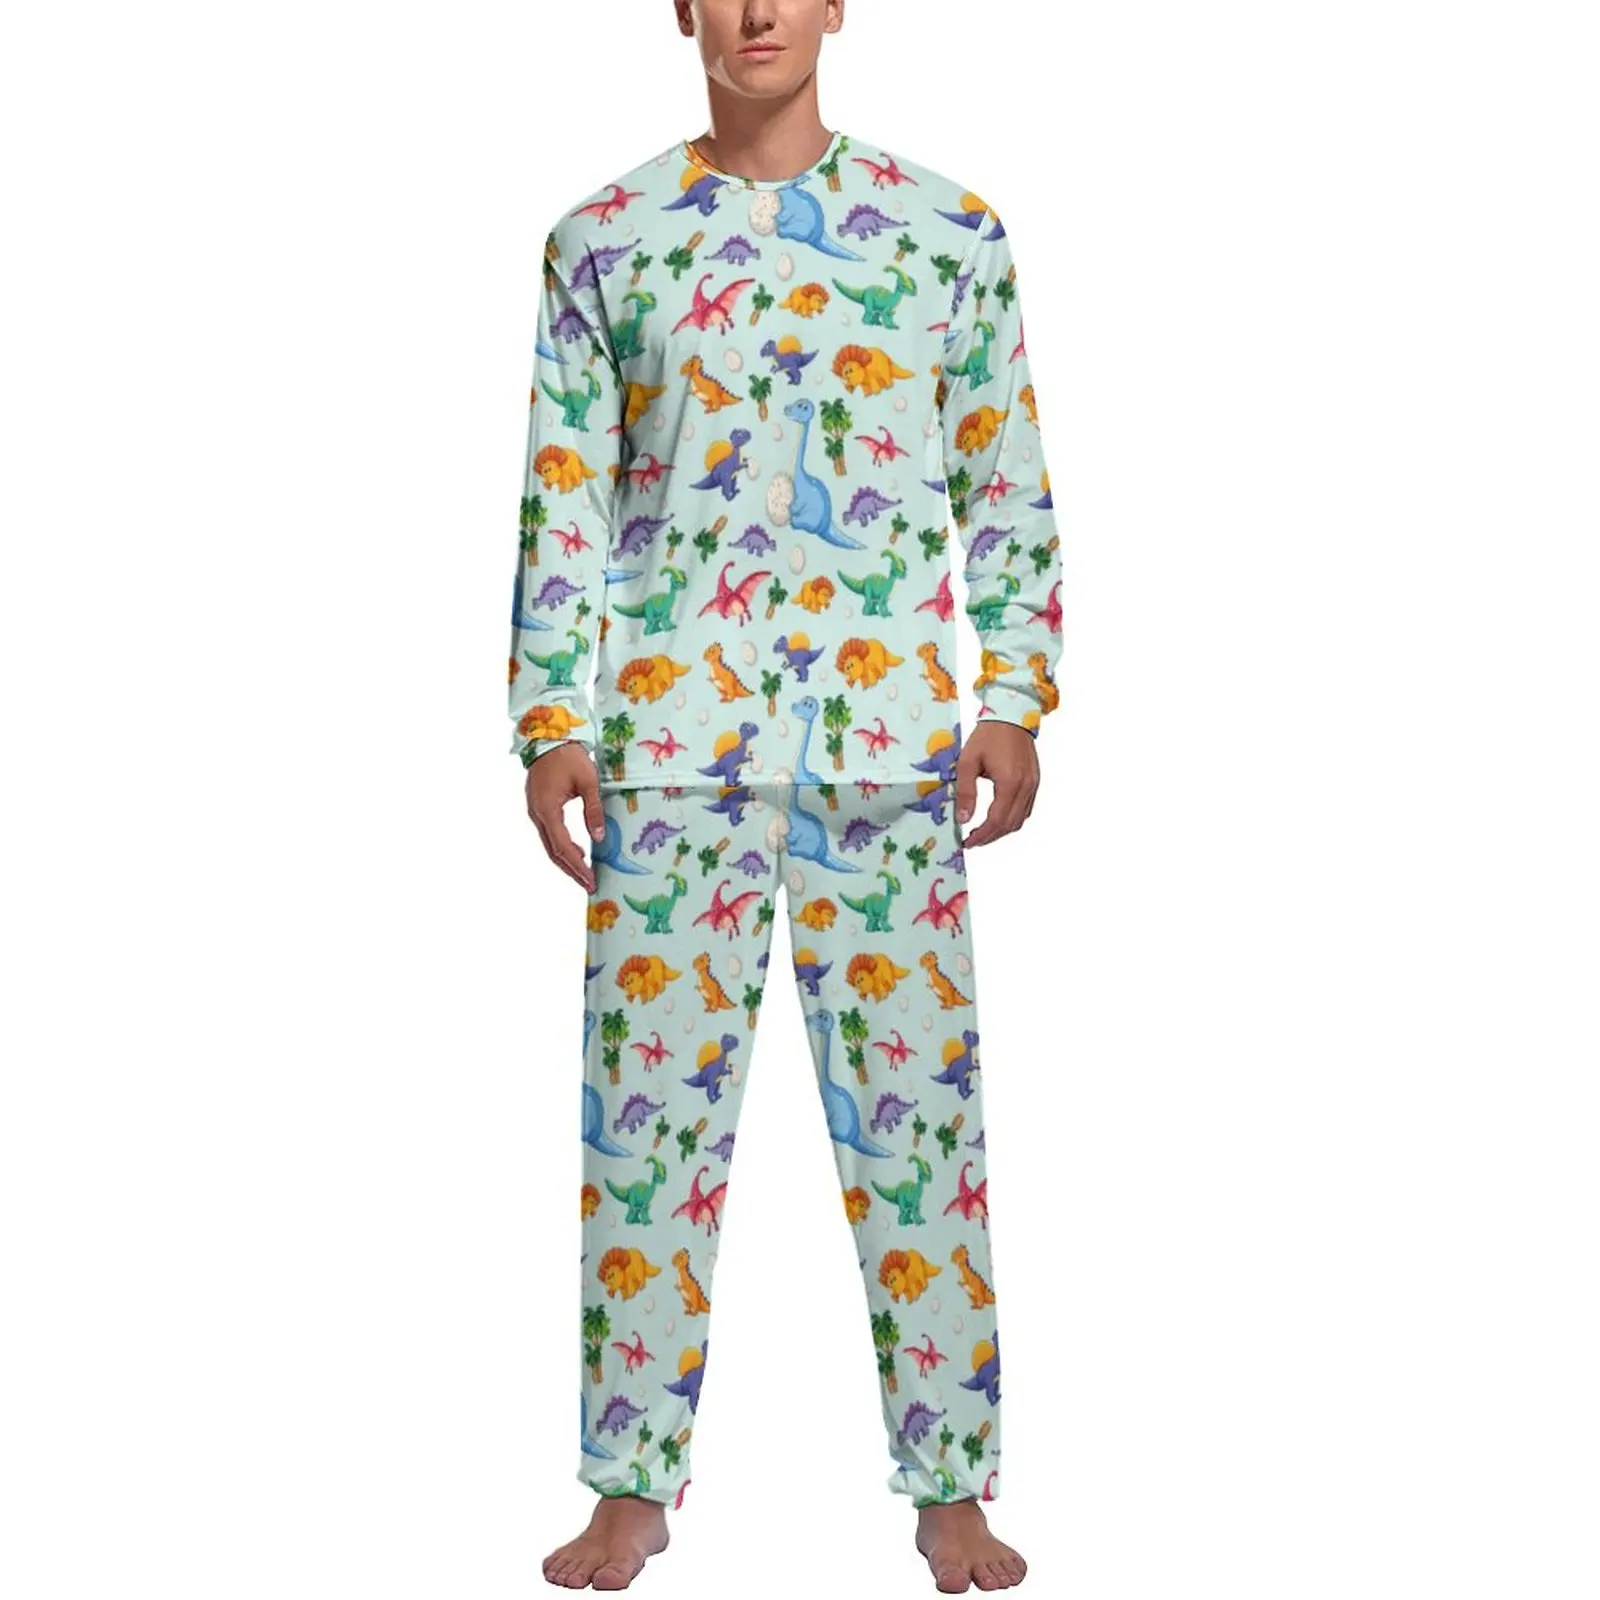 Colorful Cute Dinosaurs Pajamas Daily Jungle Animal Print Room Nightwear Men 2 Pieces Graphic Long-Sleeve Cute Pajama Sets